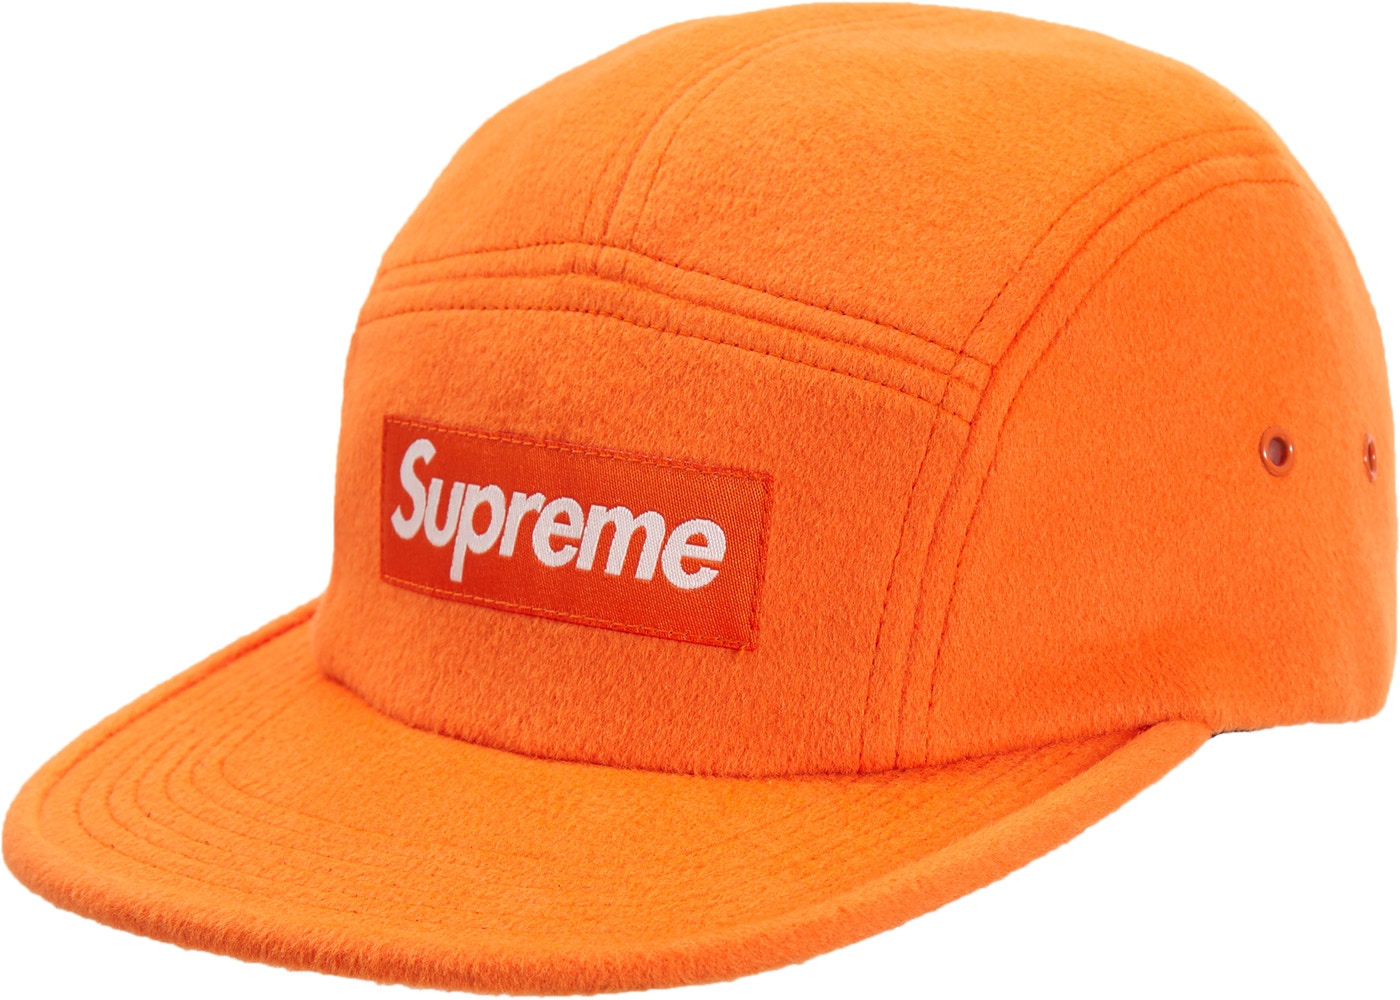 Supreme Quilted Orange Camo Camp Cap Adjustable 5 Panel Hat